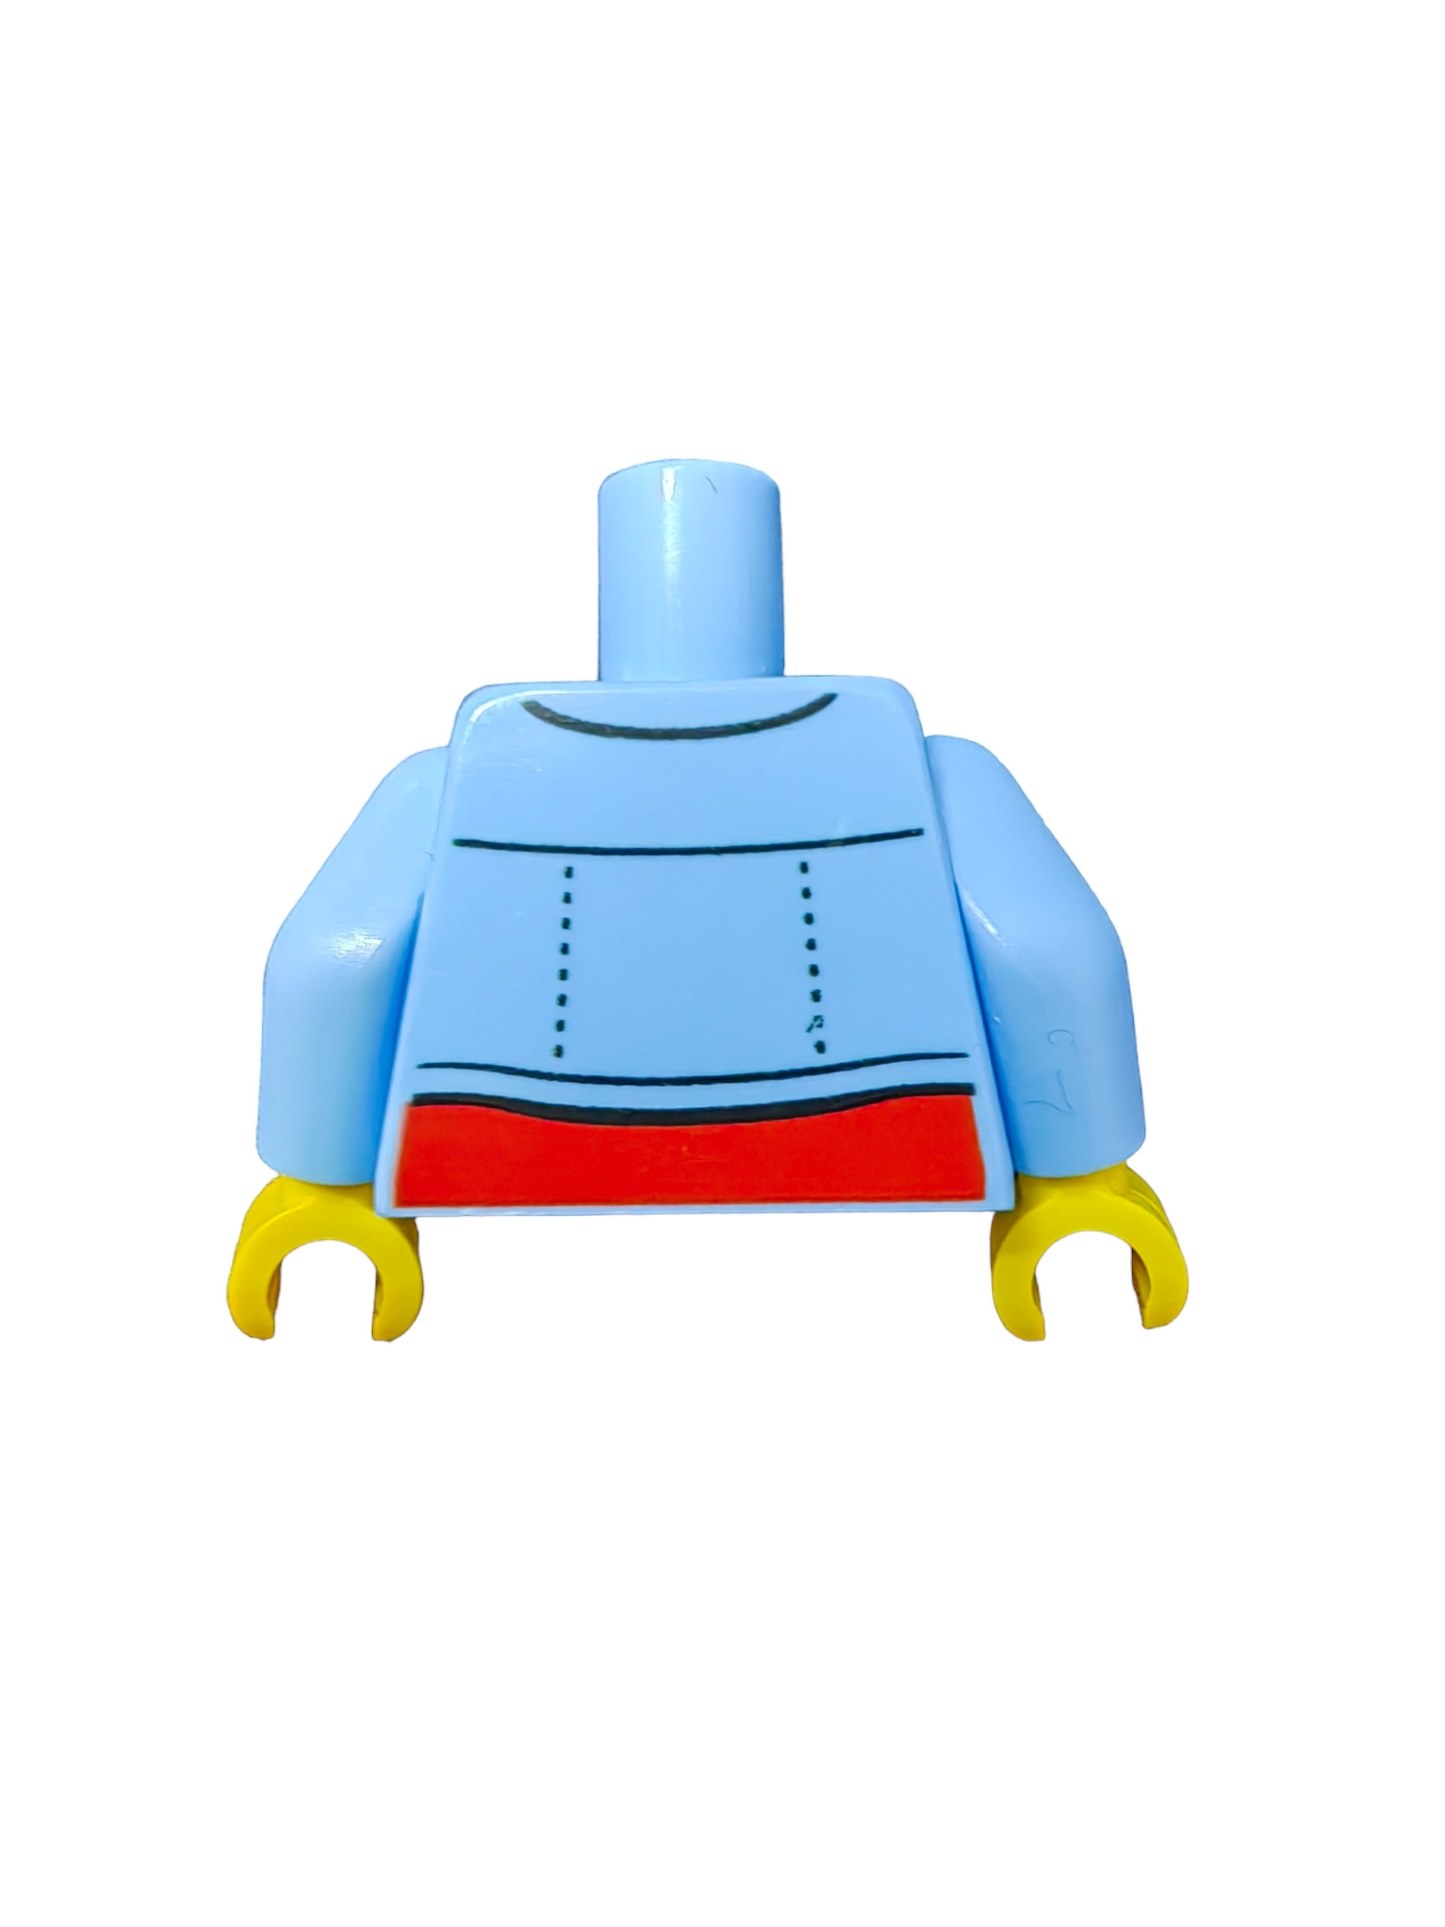 LEGO Torso, Denim Jacket Red Shirt - UB1112